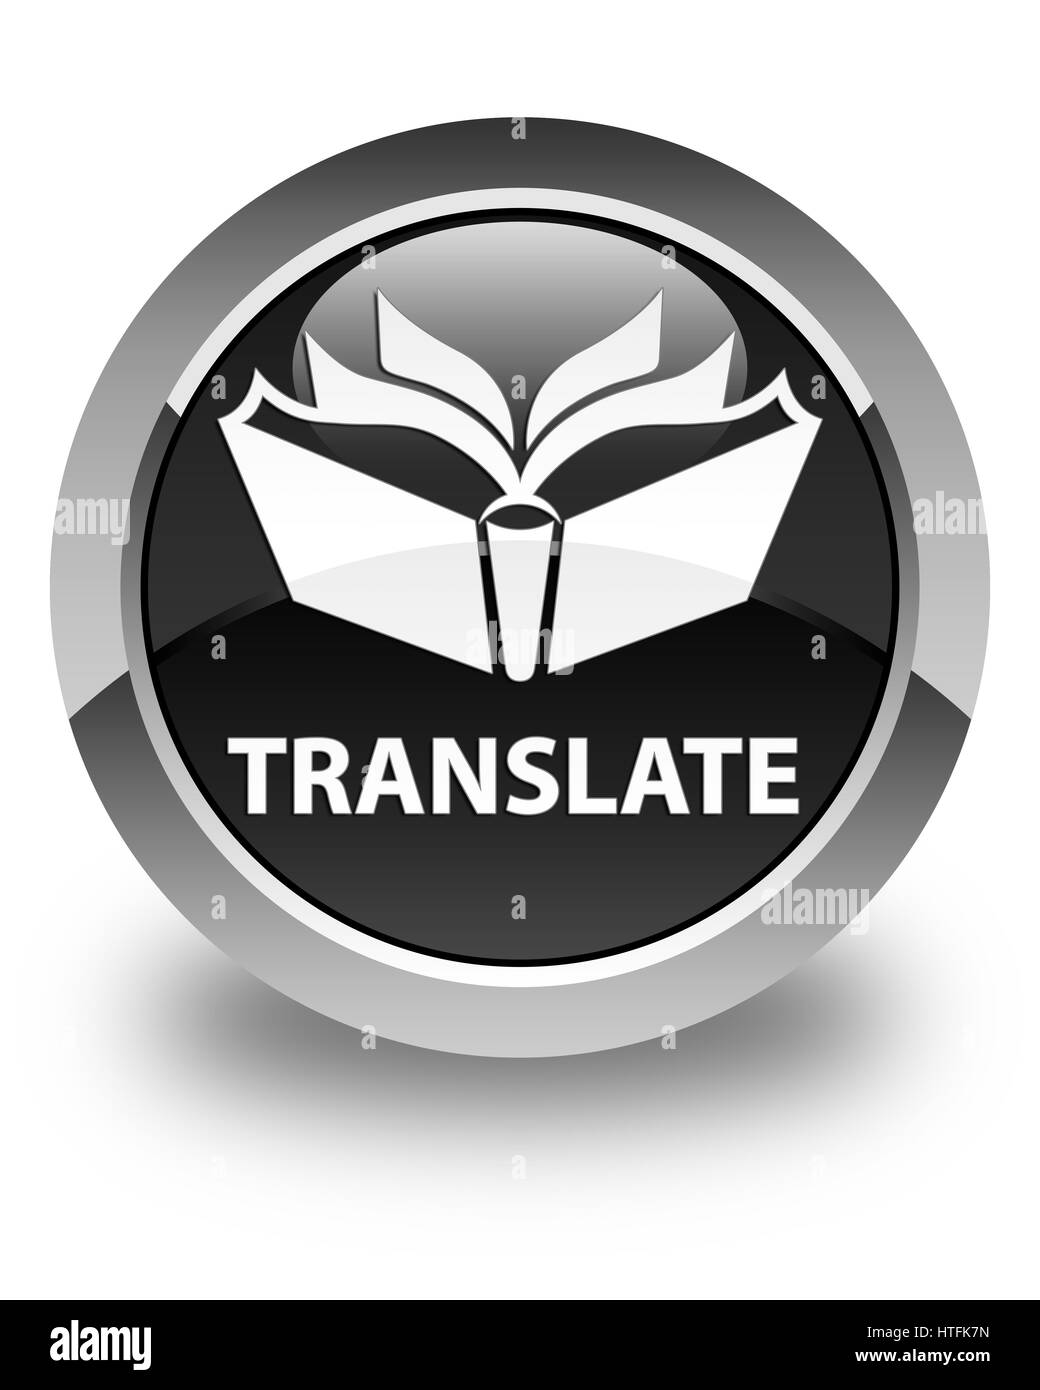 Translate isolé sur bouton rond noir brillant abstract illustration Banque D'Images